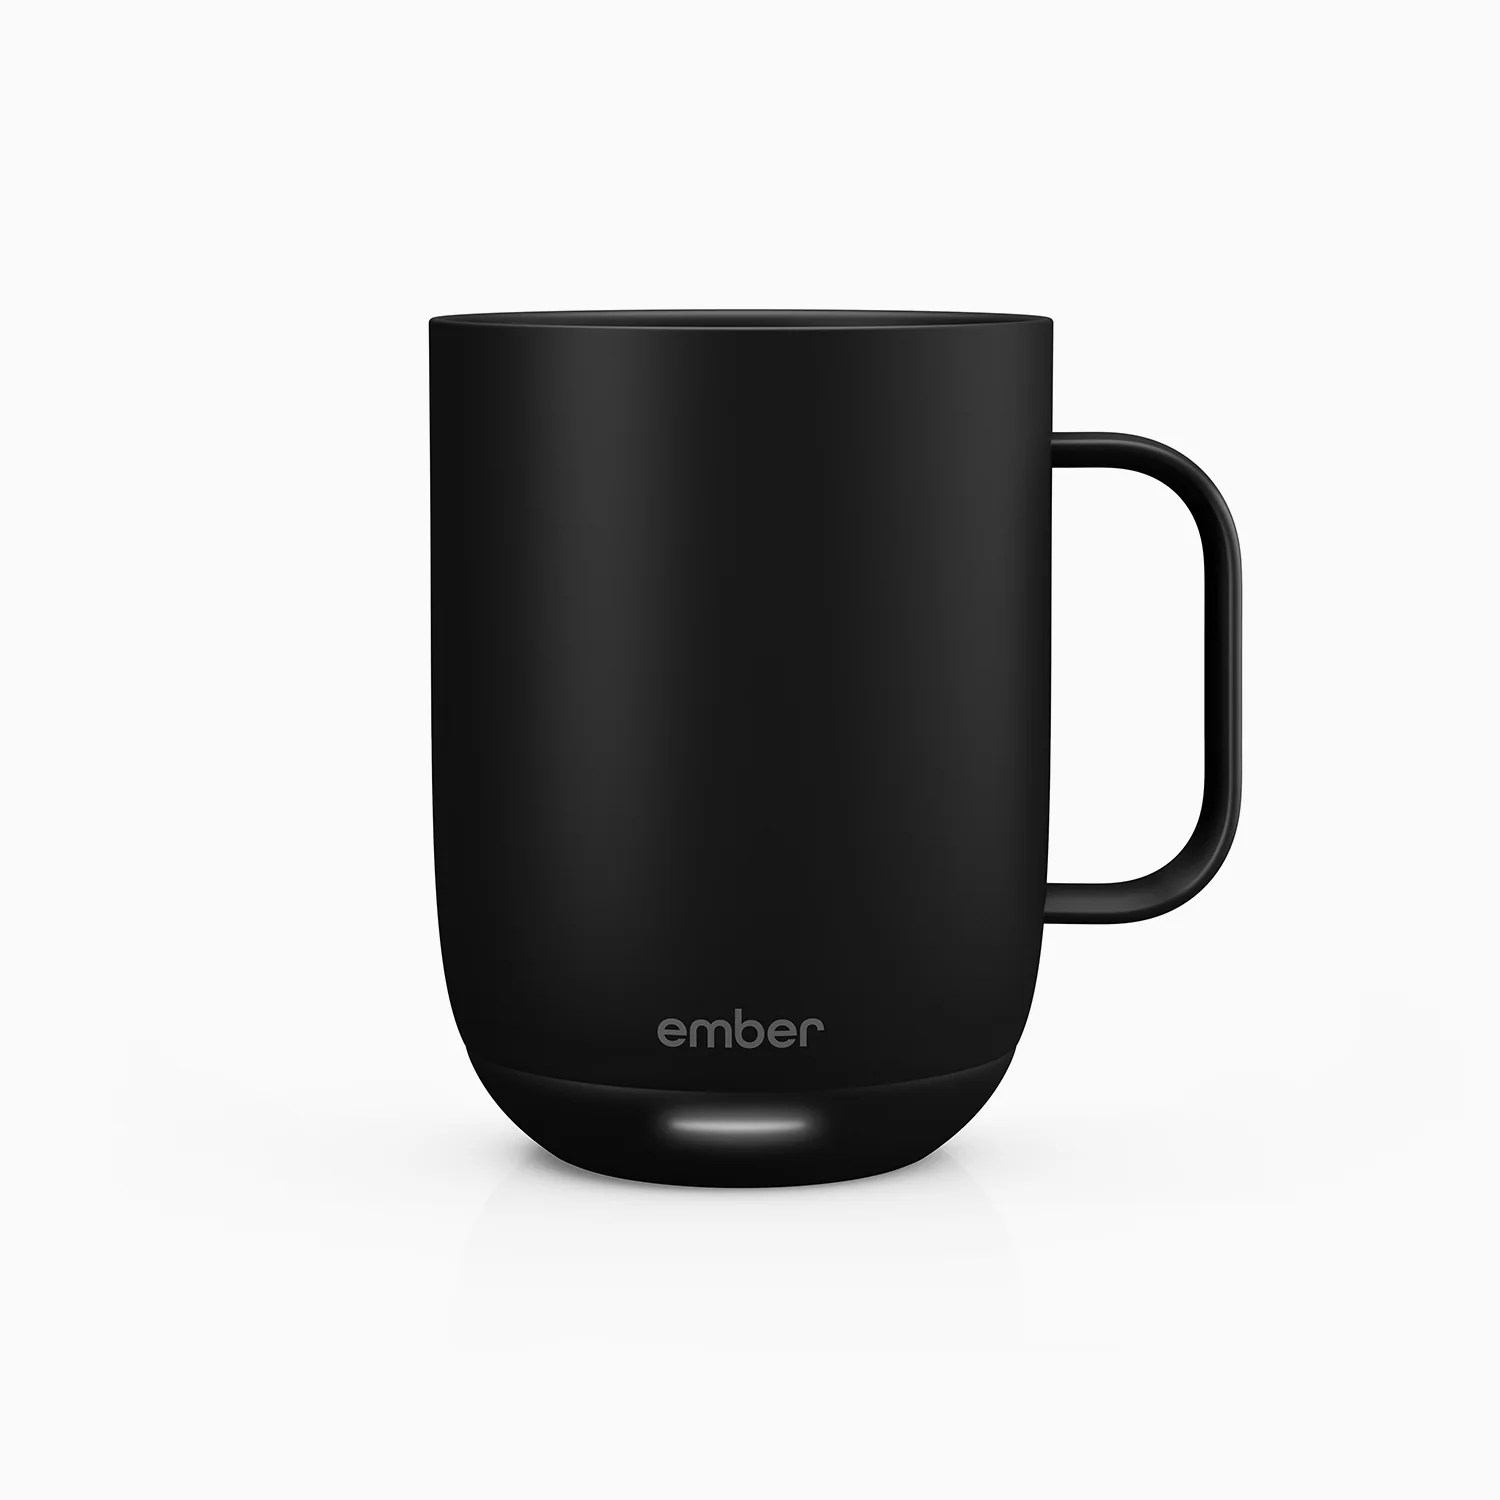 An image of a black Ember mug